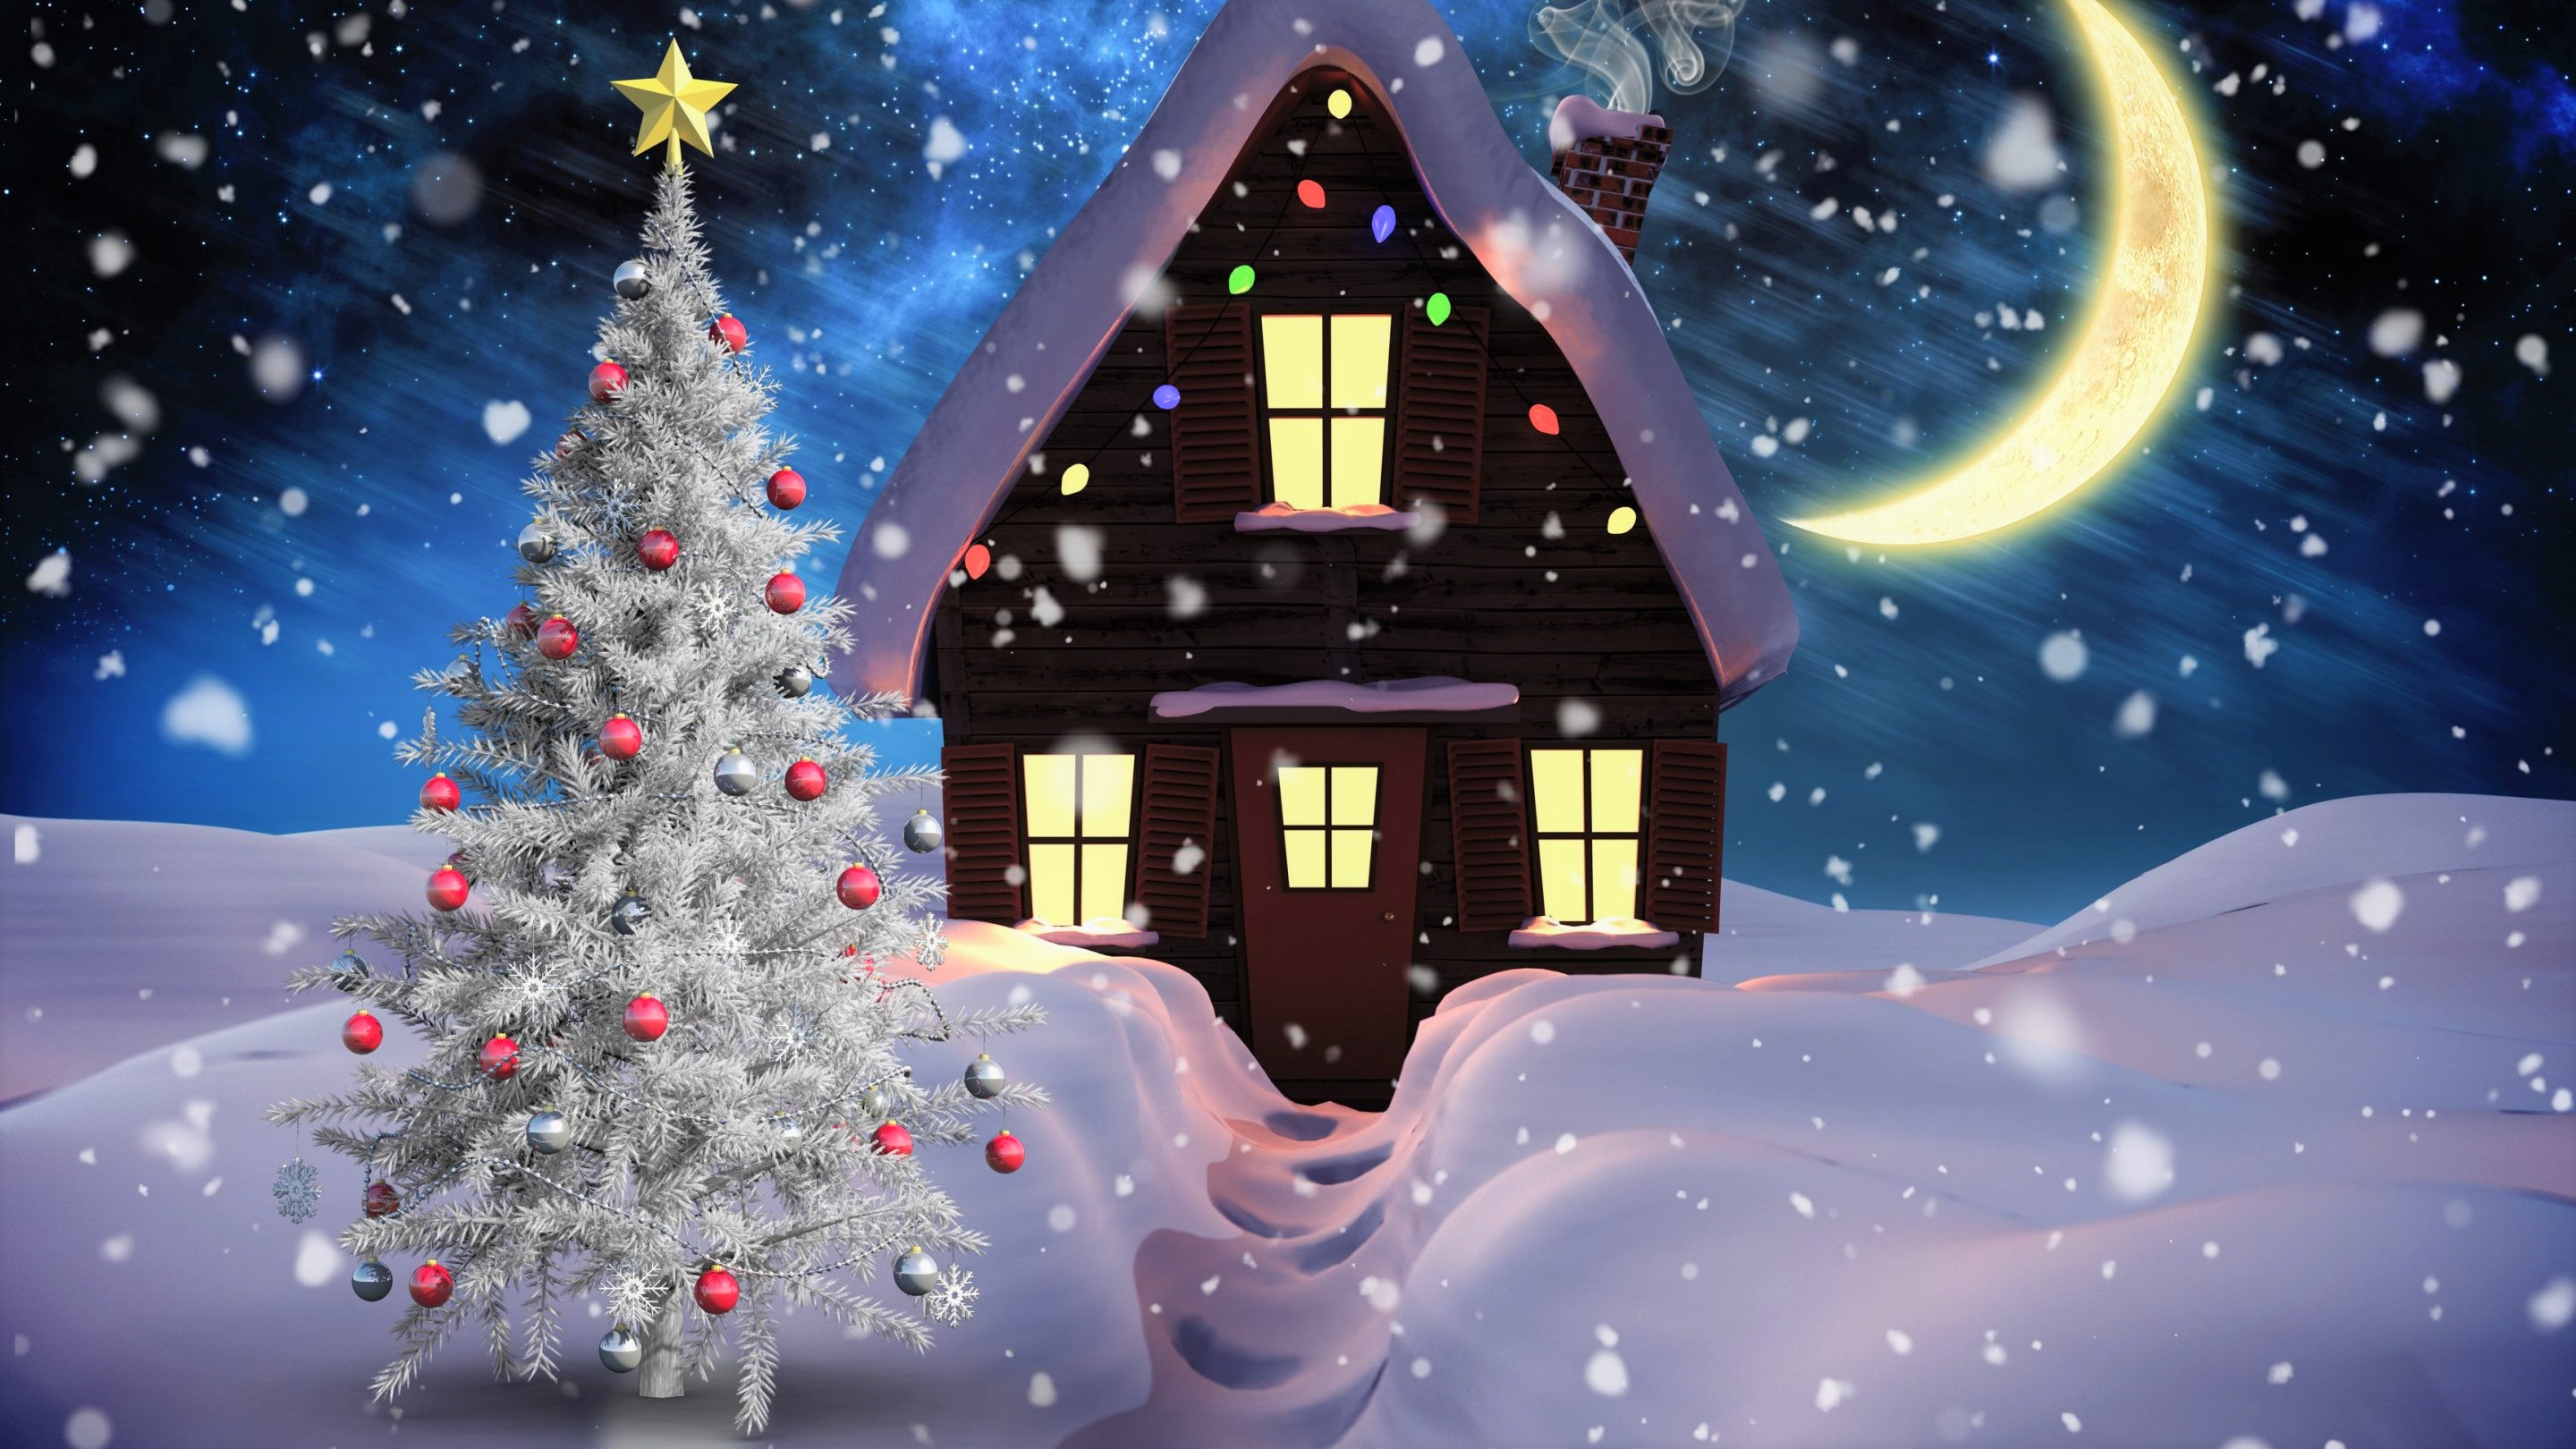 House Christmas Tree Snowfall Snow Moon Crescent 2880x1620